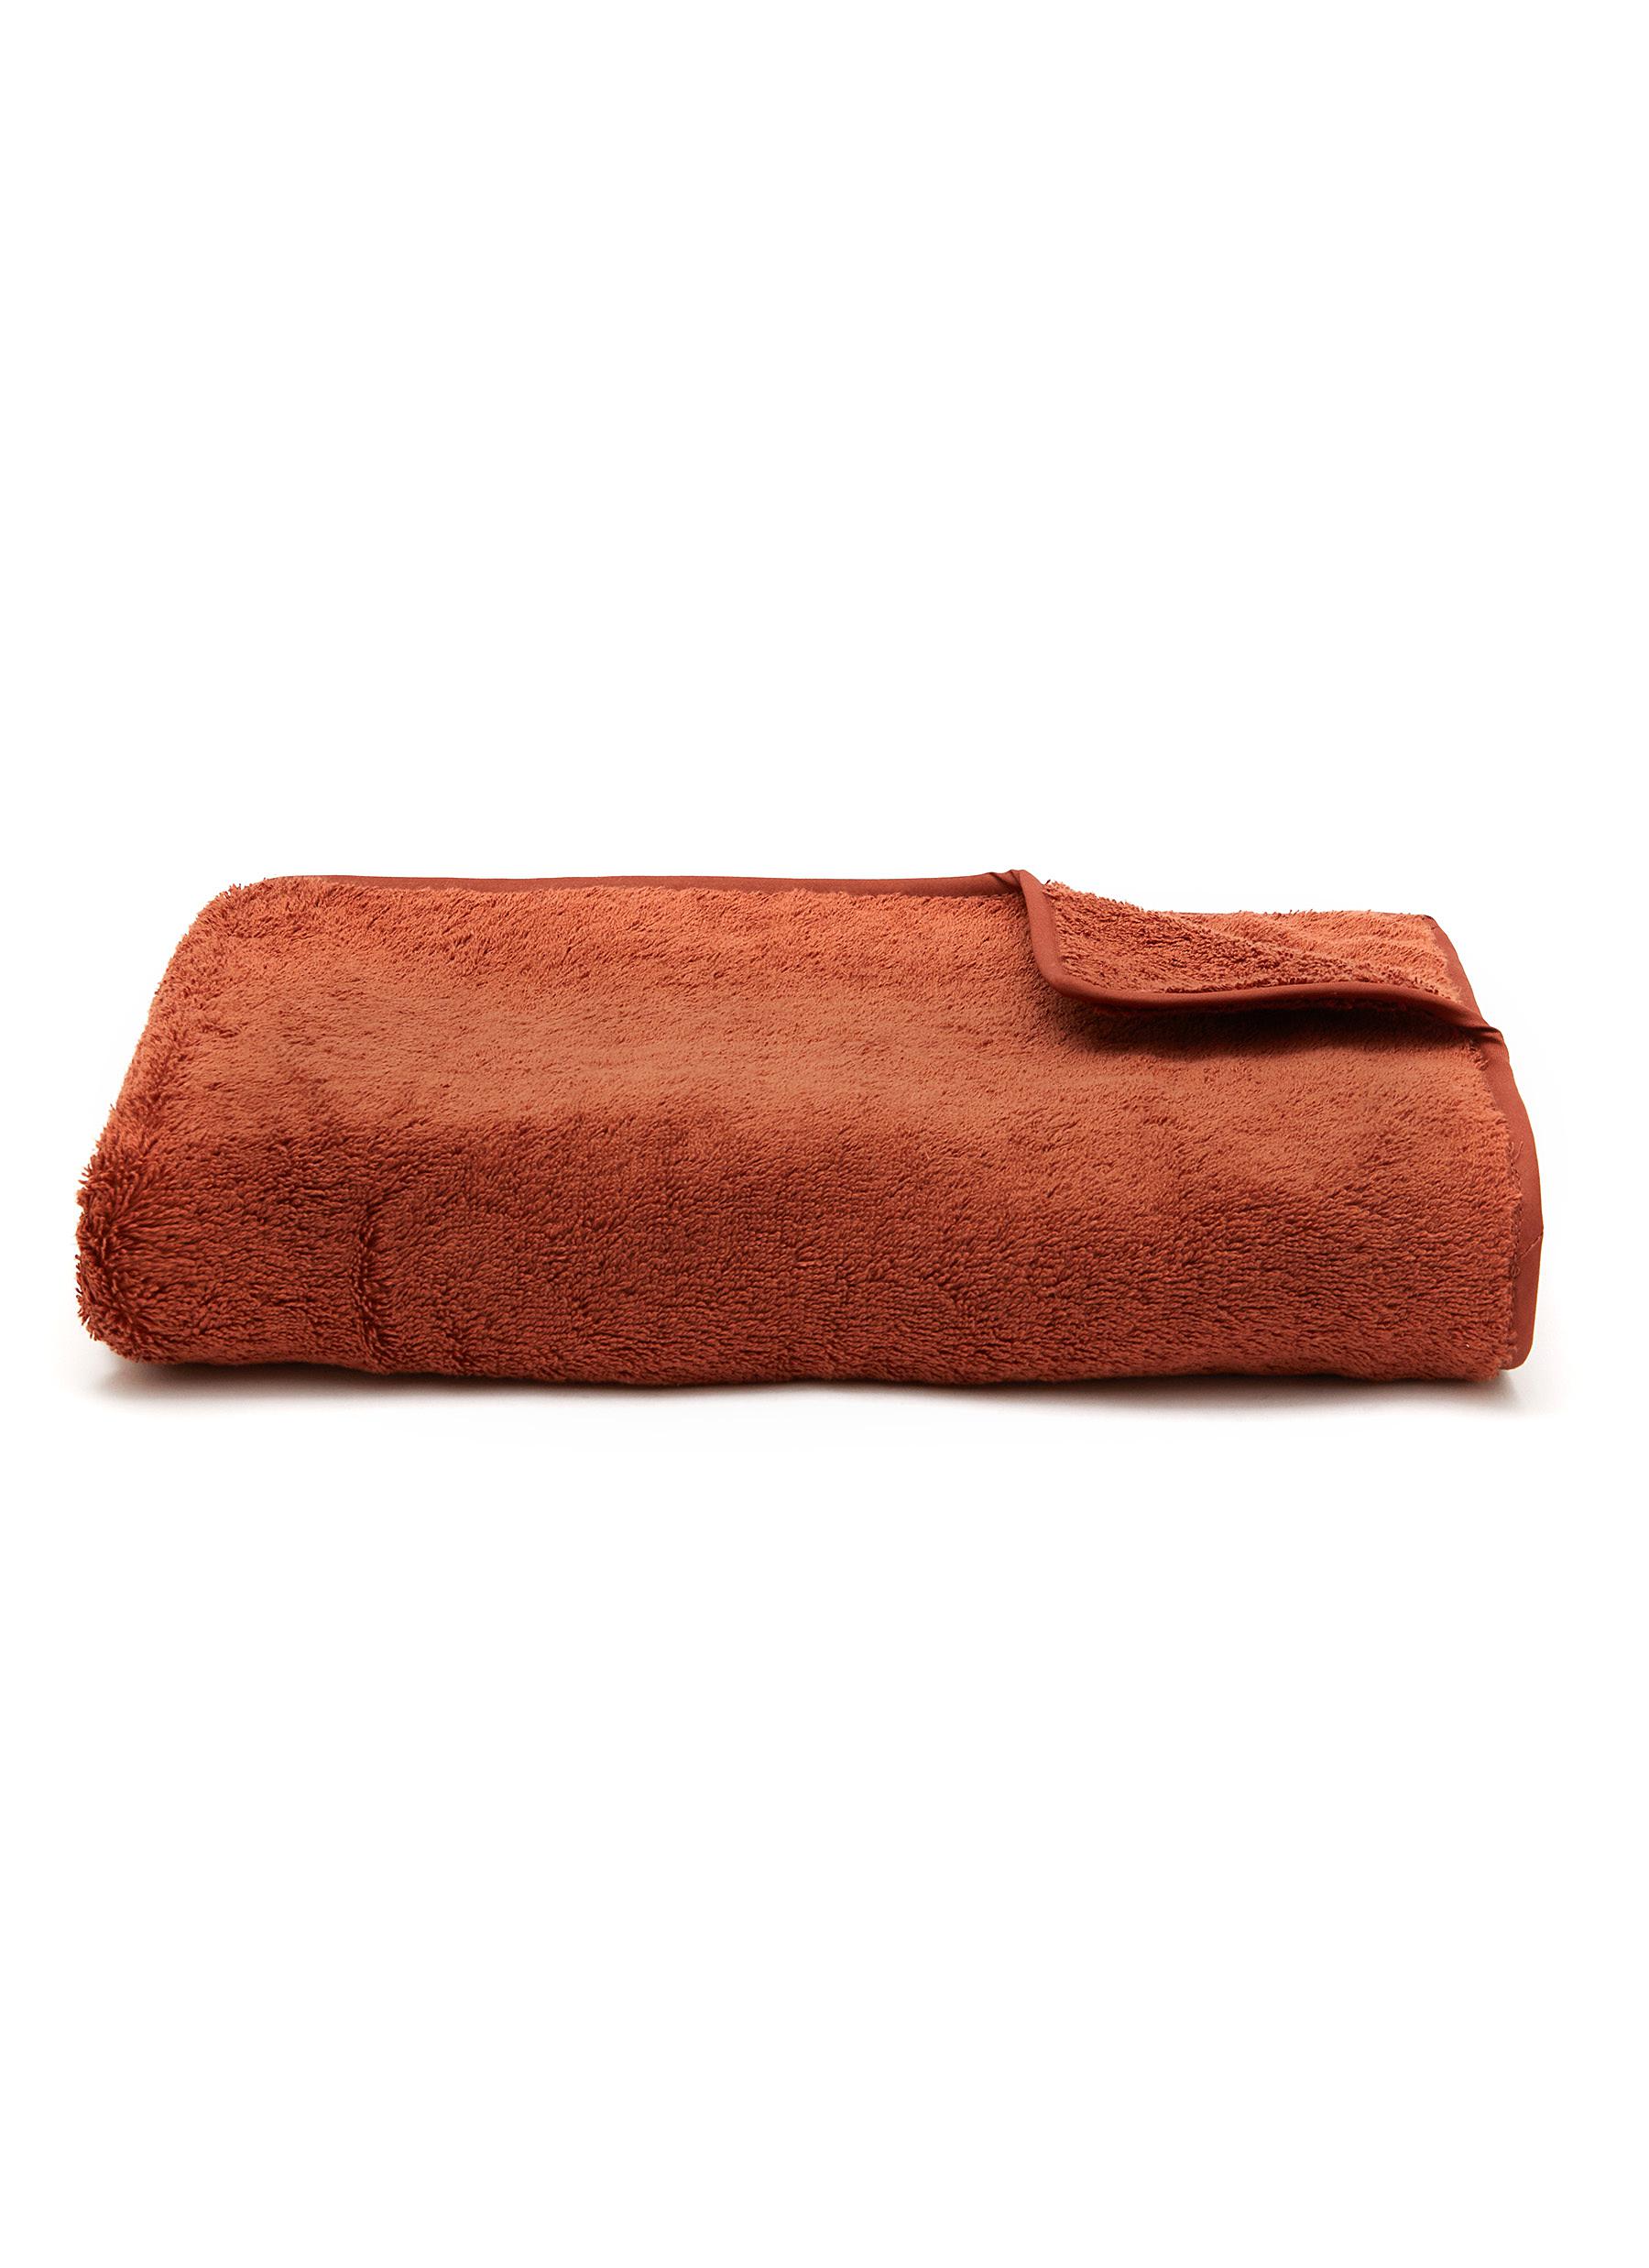 Unito Bath Towel - Sunset Red